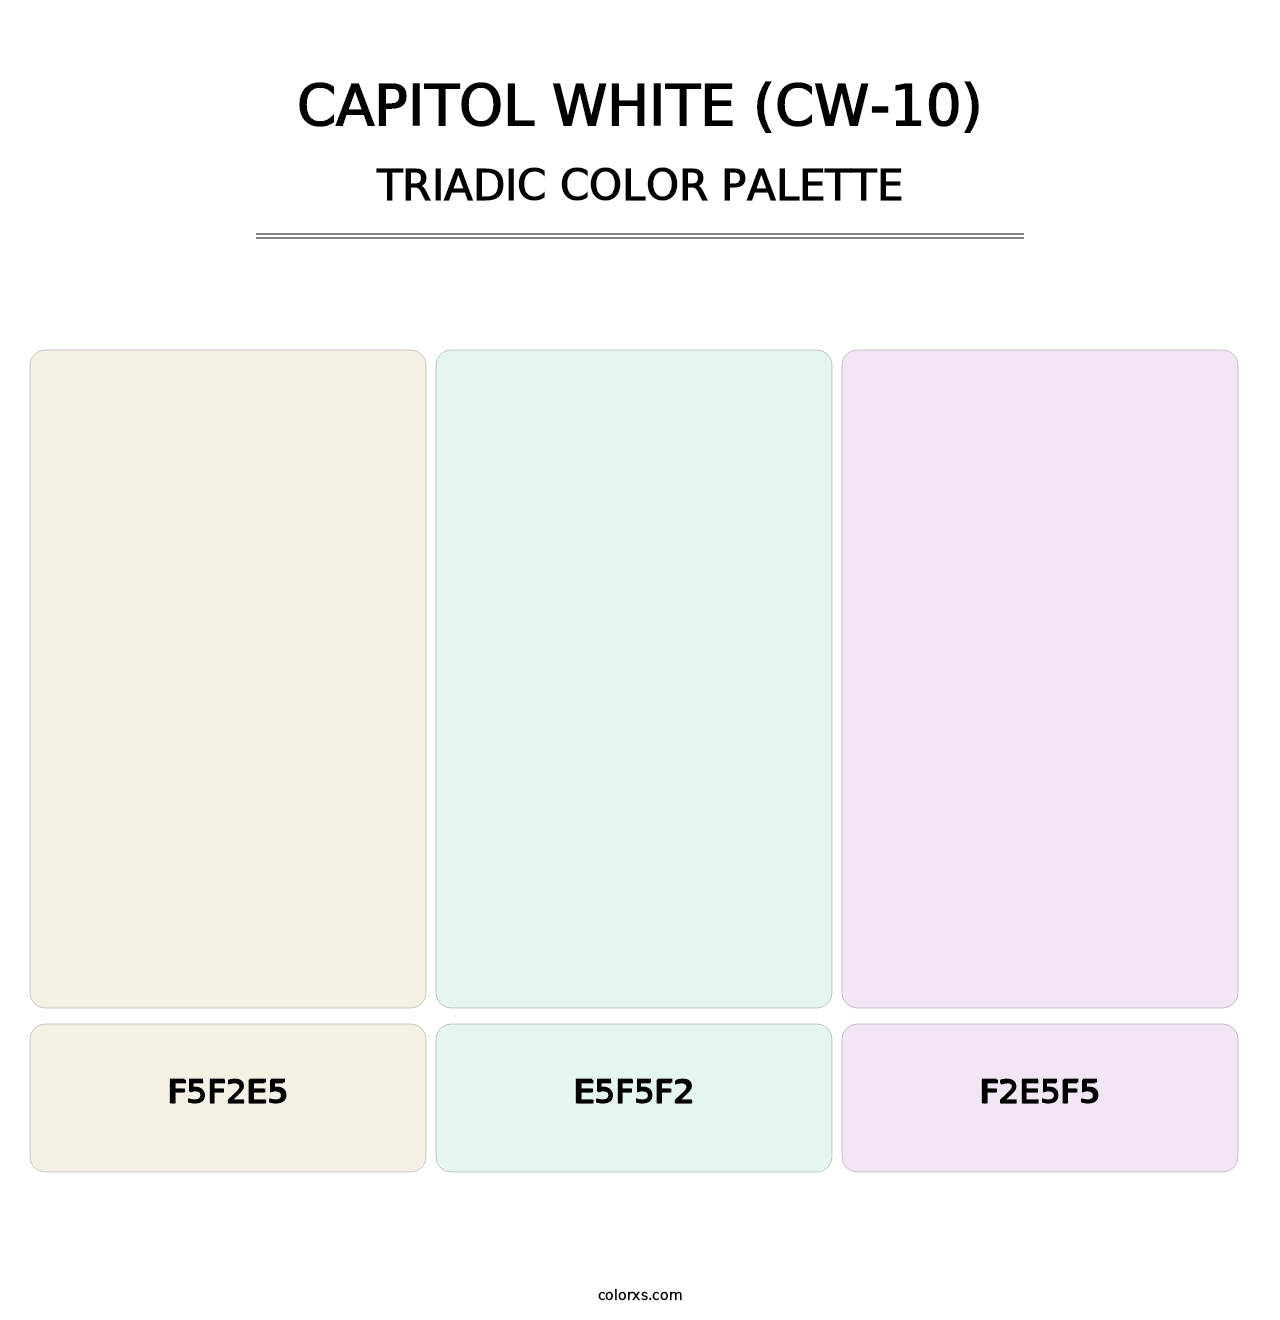 Capitol White (CW-10) - Triadic Color Palette